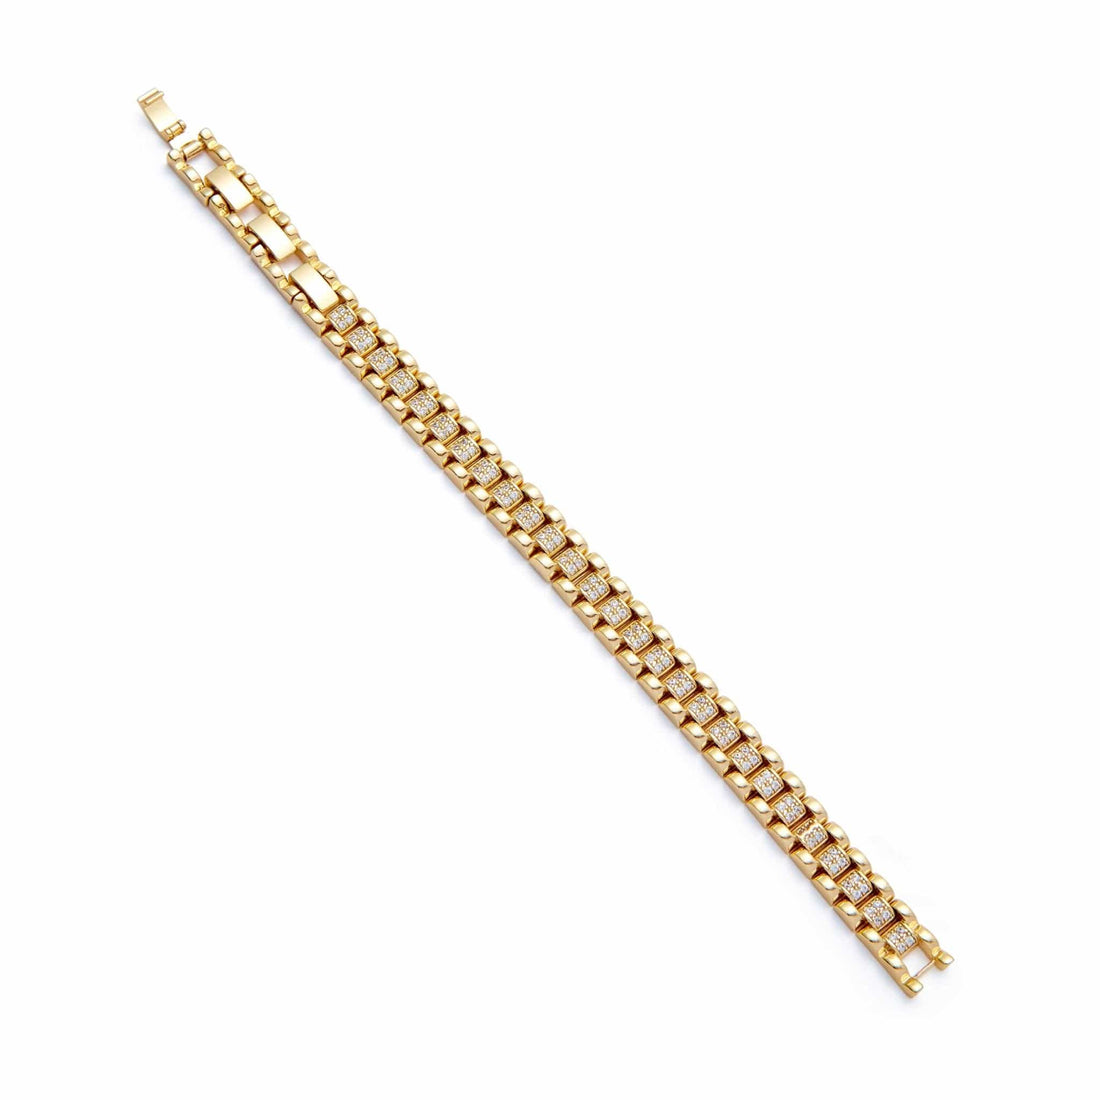 All Wear Jewellery Bracelets 6.5" - 8" Adjustable / 18k Gold ROLEX LINK BRACELET 10MM